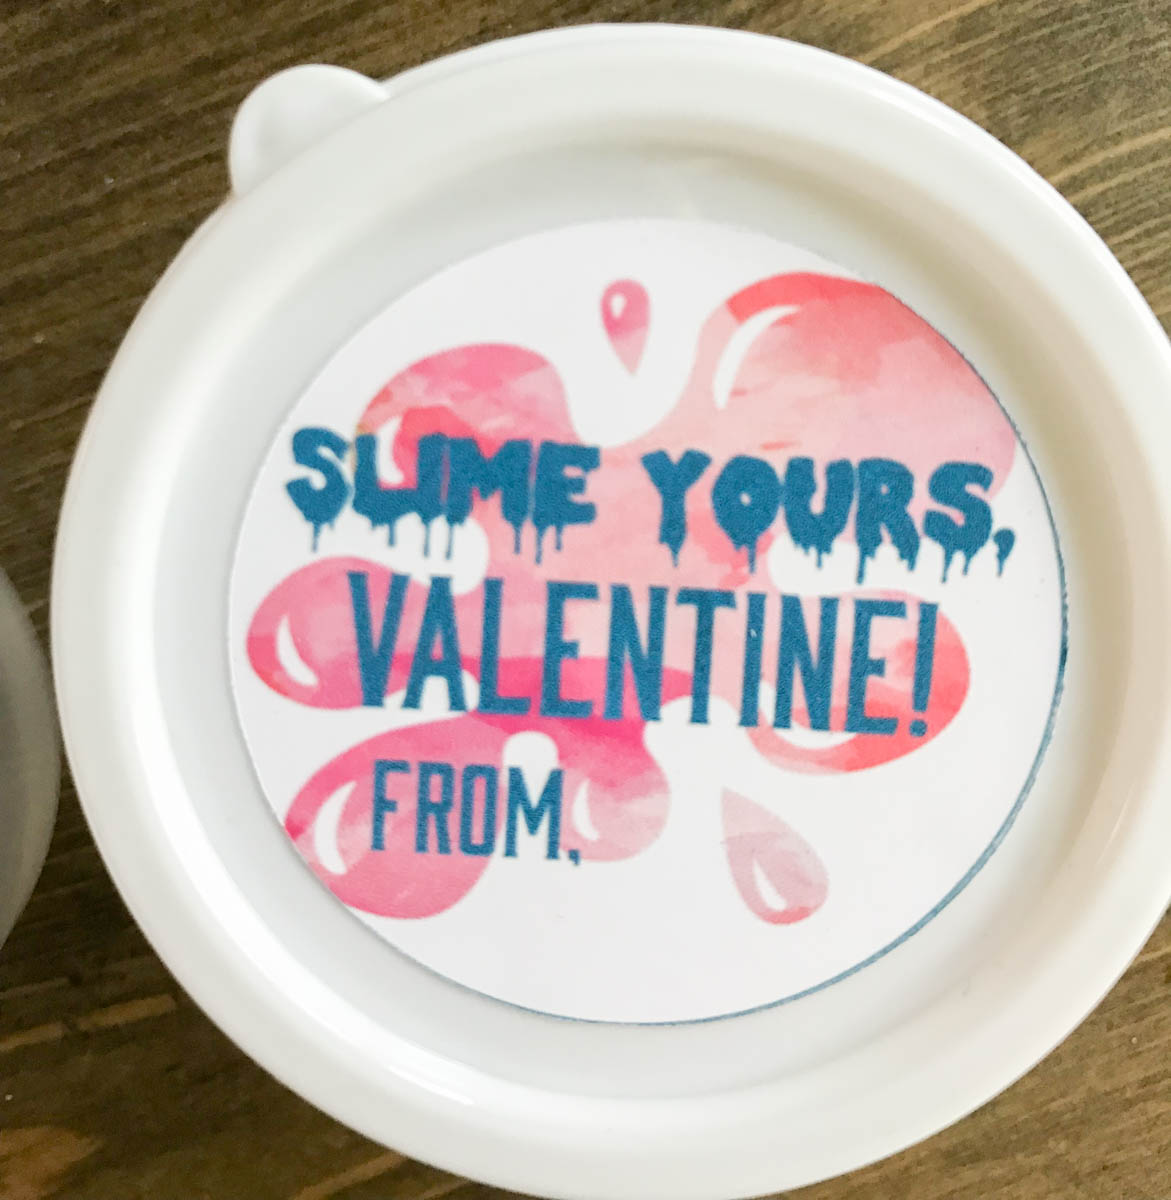 Everyday Party Magazine Slime Yours Valentine's Day Treats #DIY #Slime #ValentinesDay #KidsValentines #FreePrintables